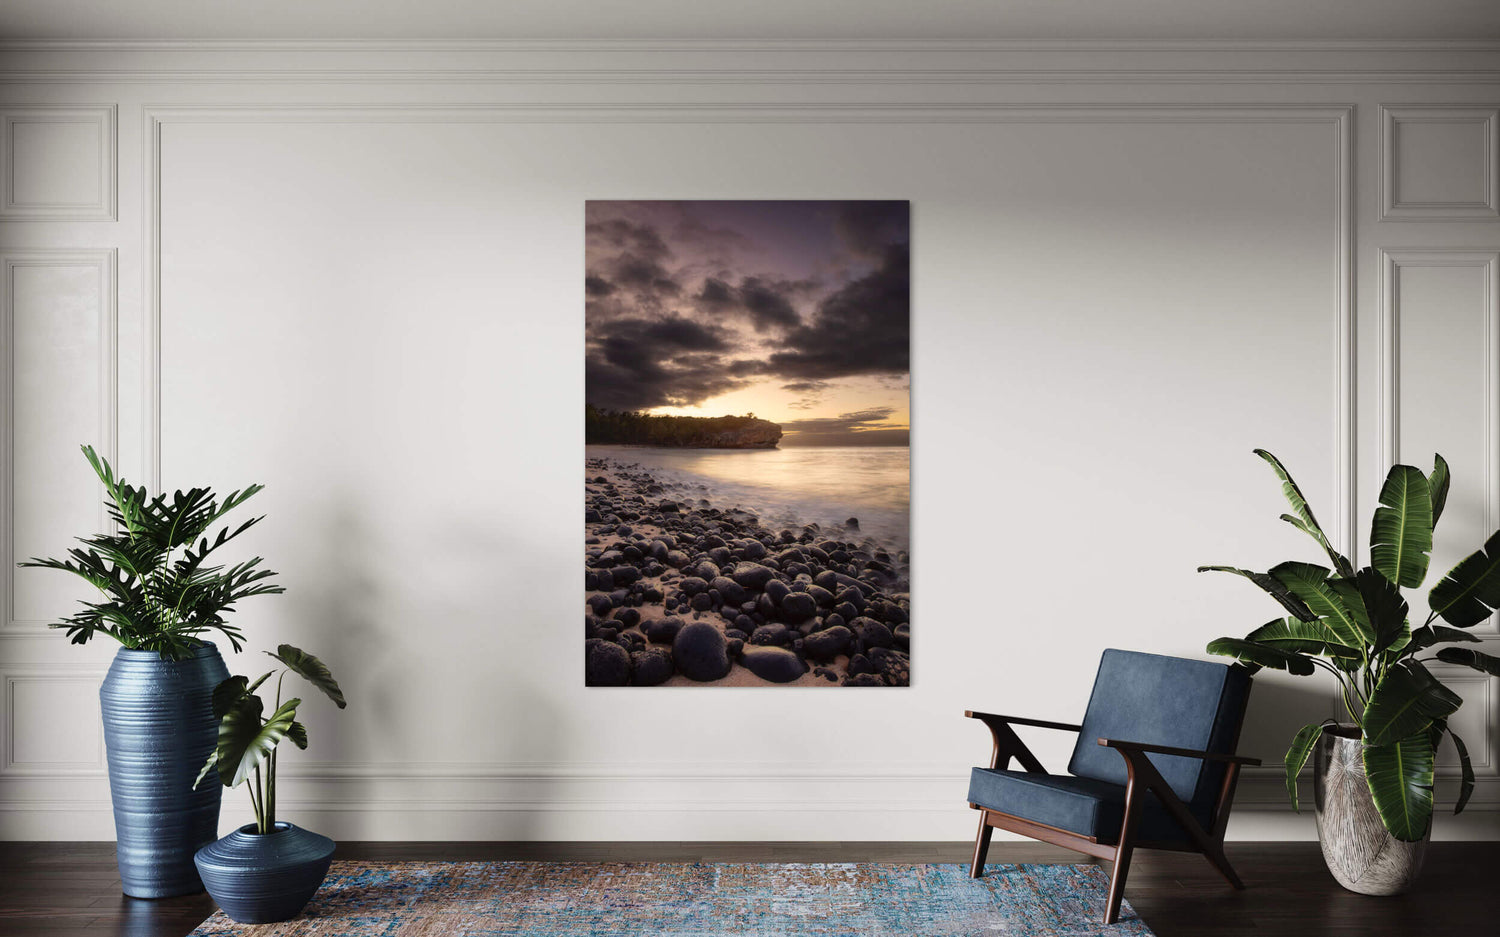 A Shipwreck Beach sunrise picture from Poipu, Kauai, hangs in a living room.